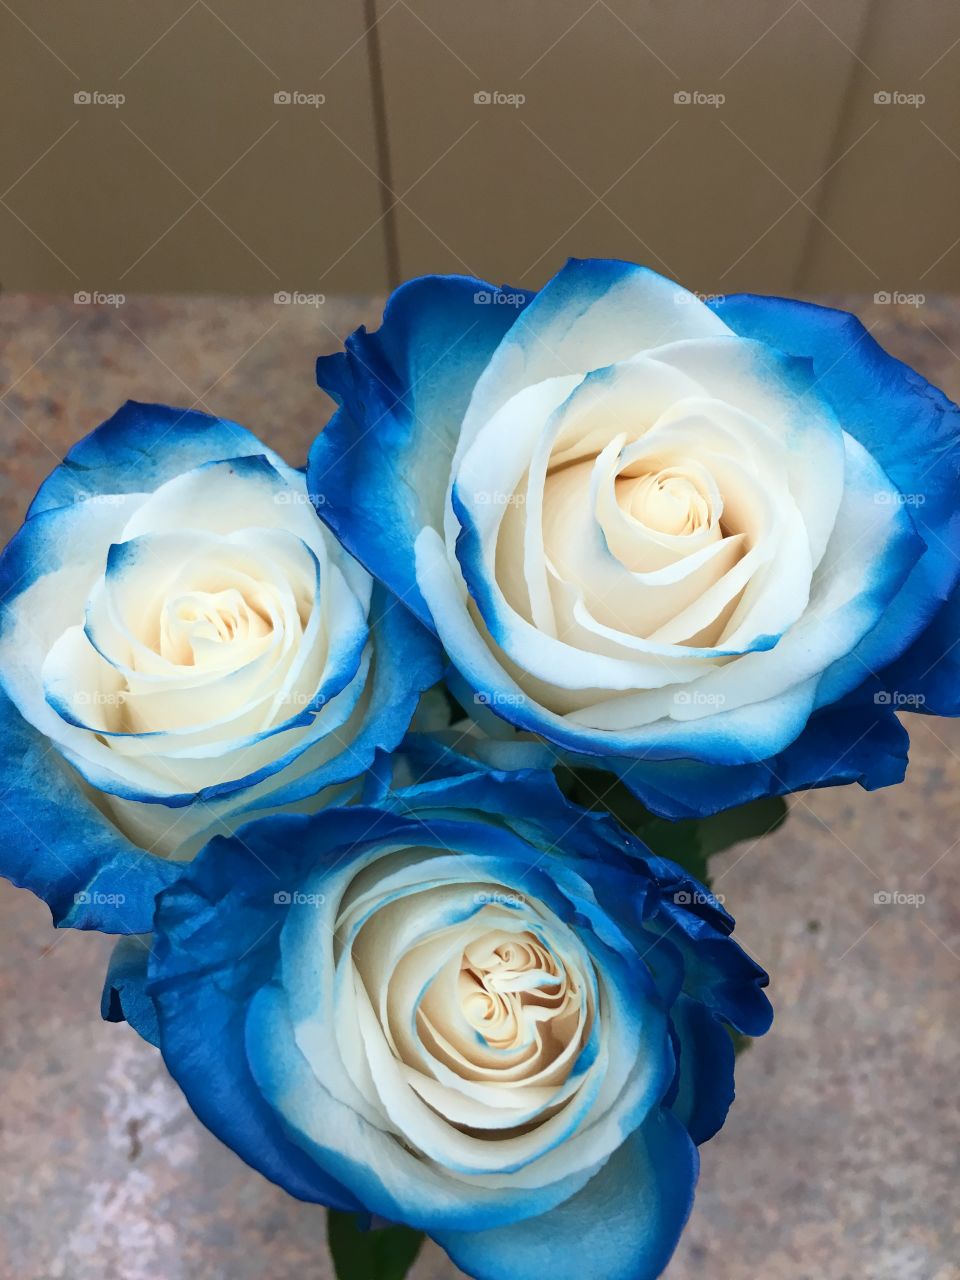 Flowers for my girlfriend